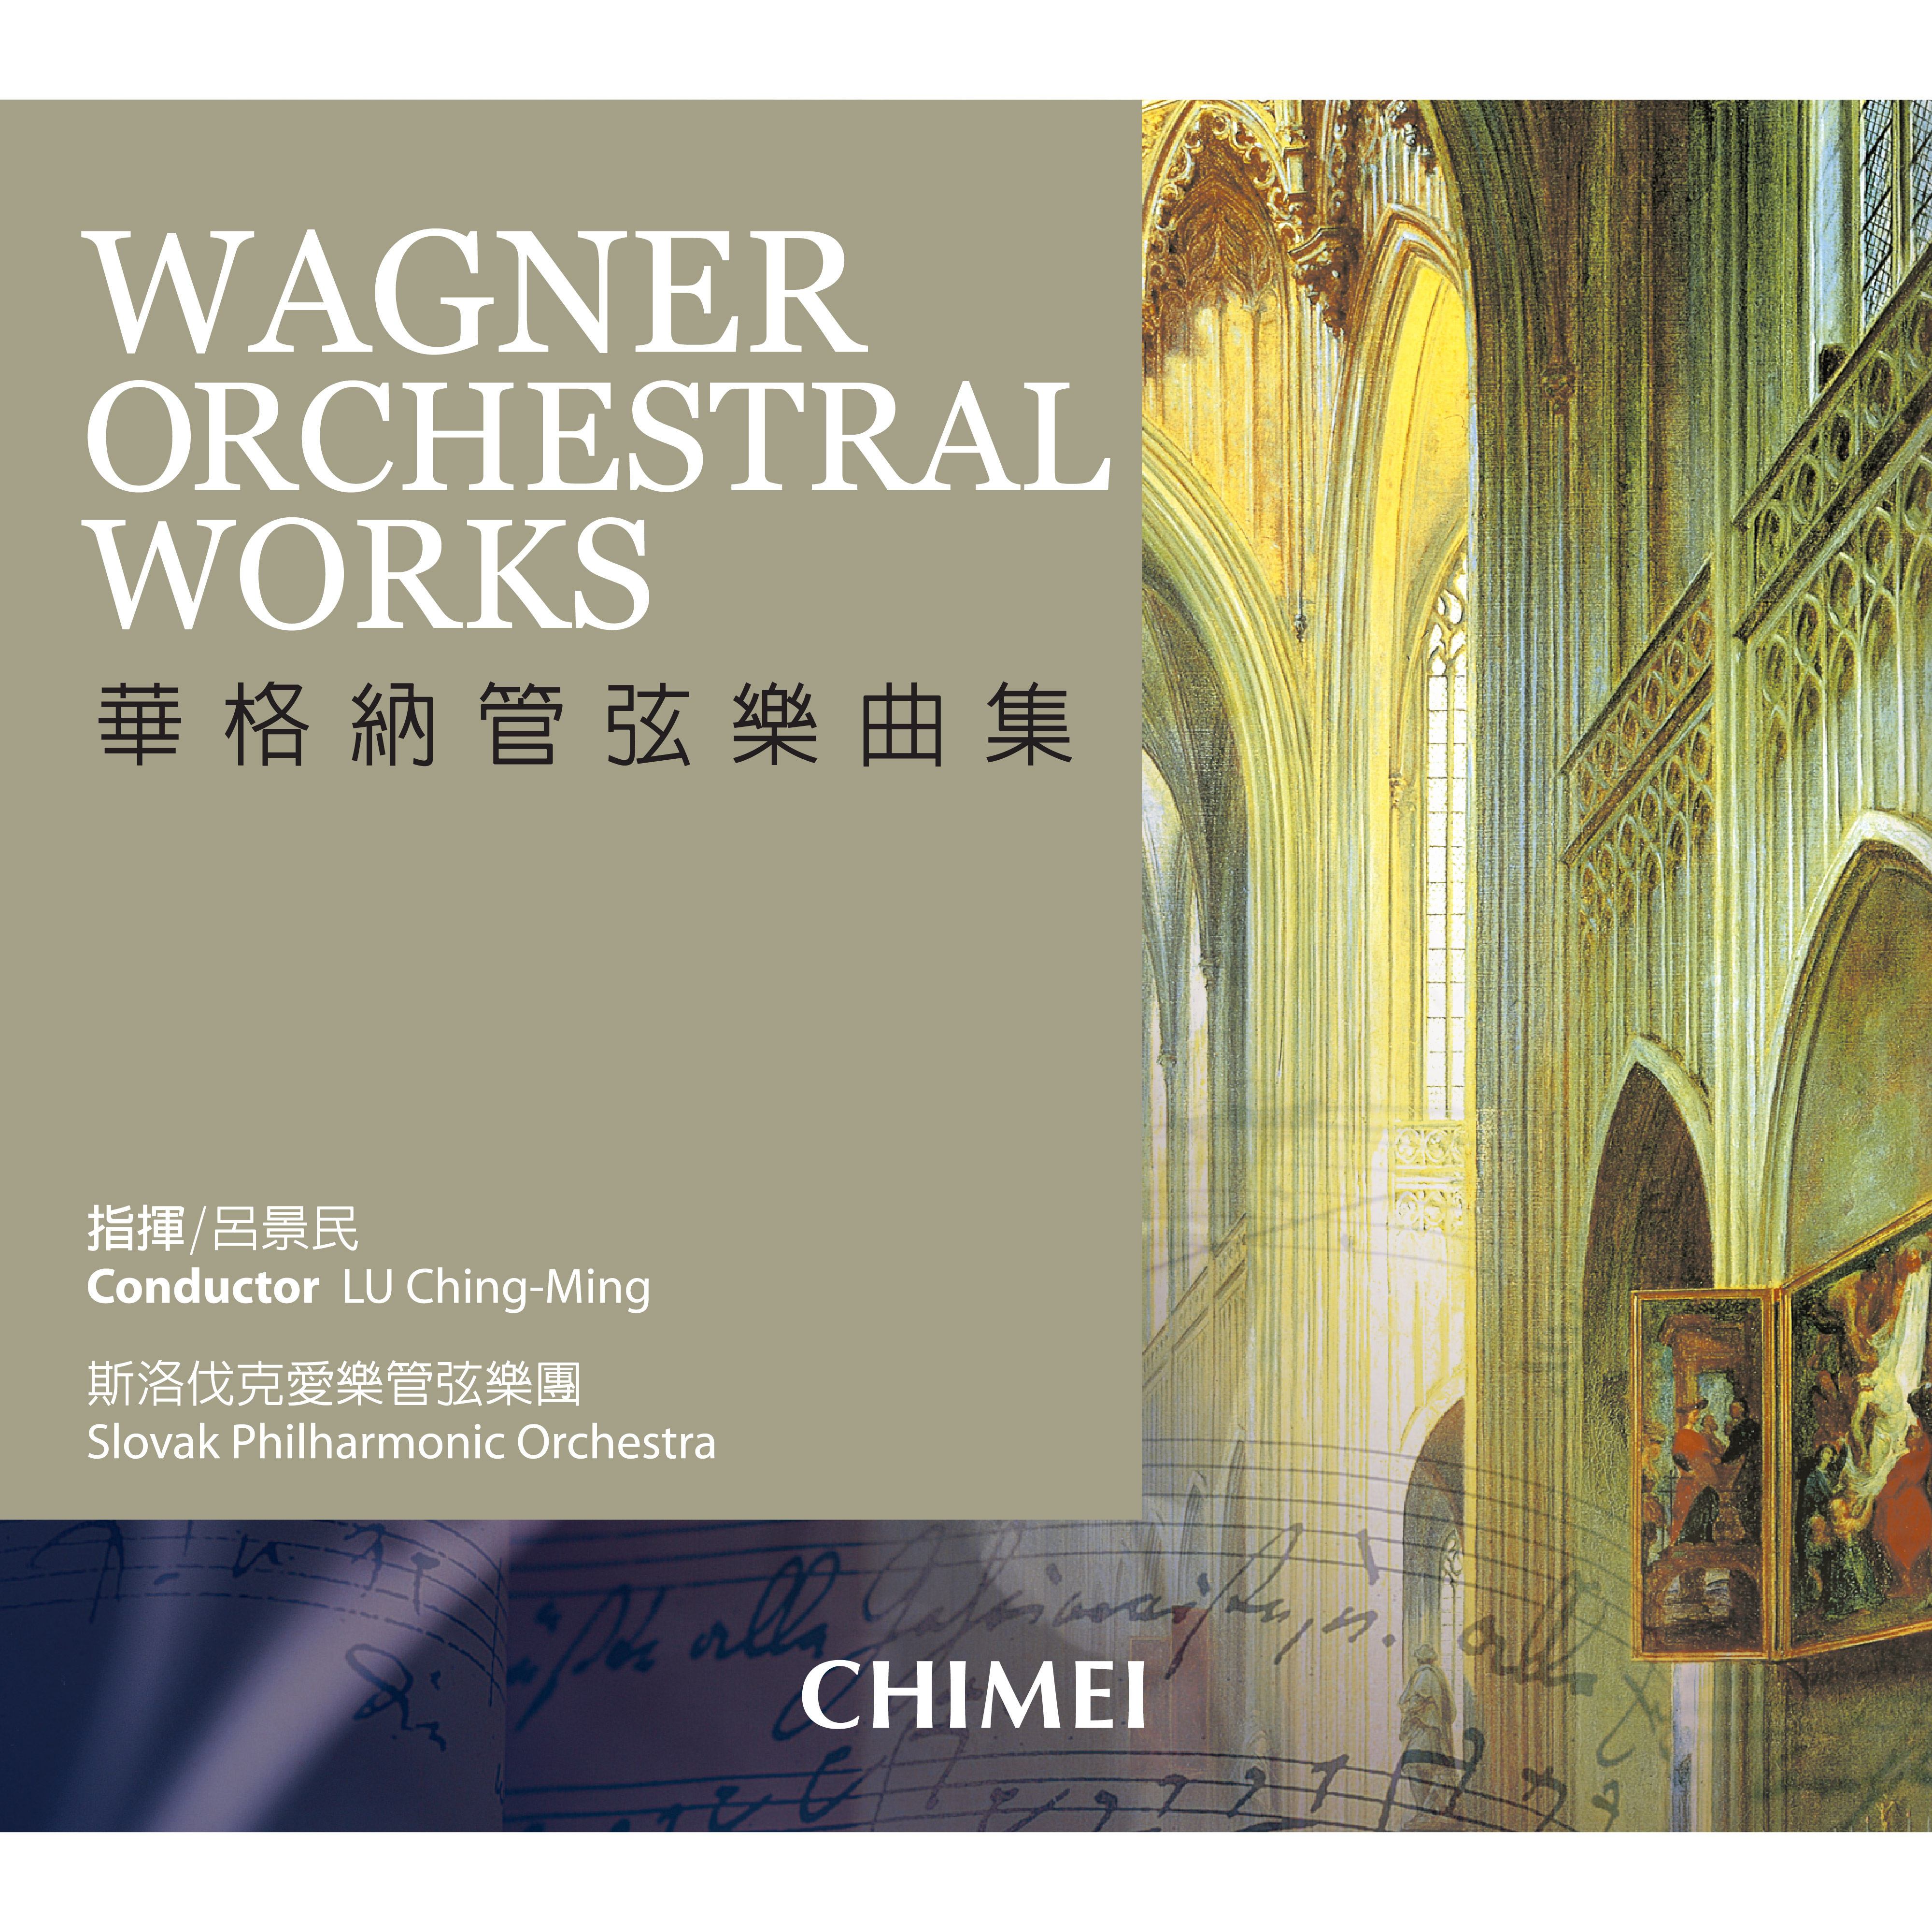 Wagner Orchestral works